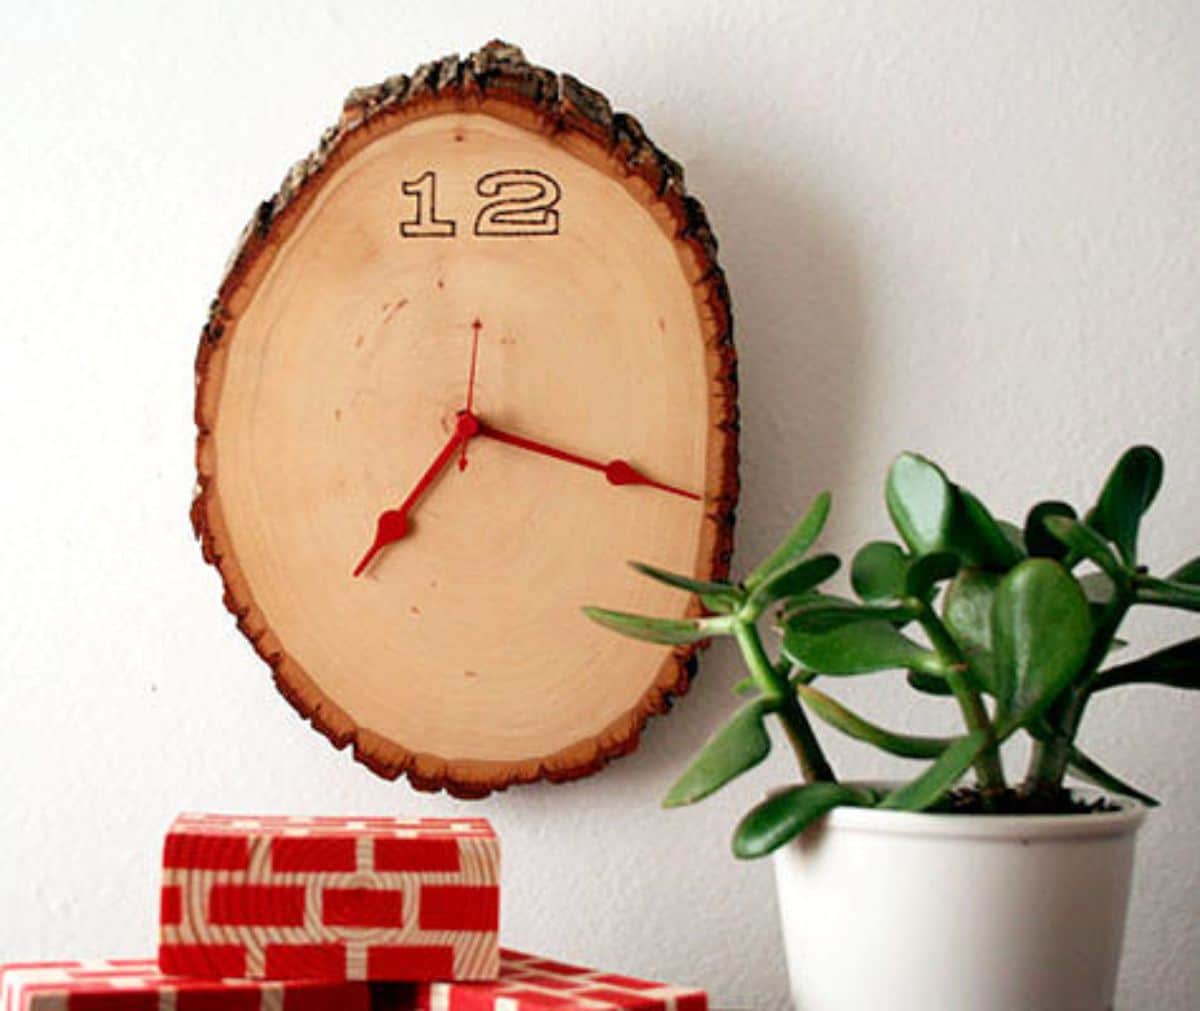 DIY Rustic Wooden Clock